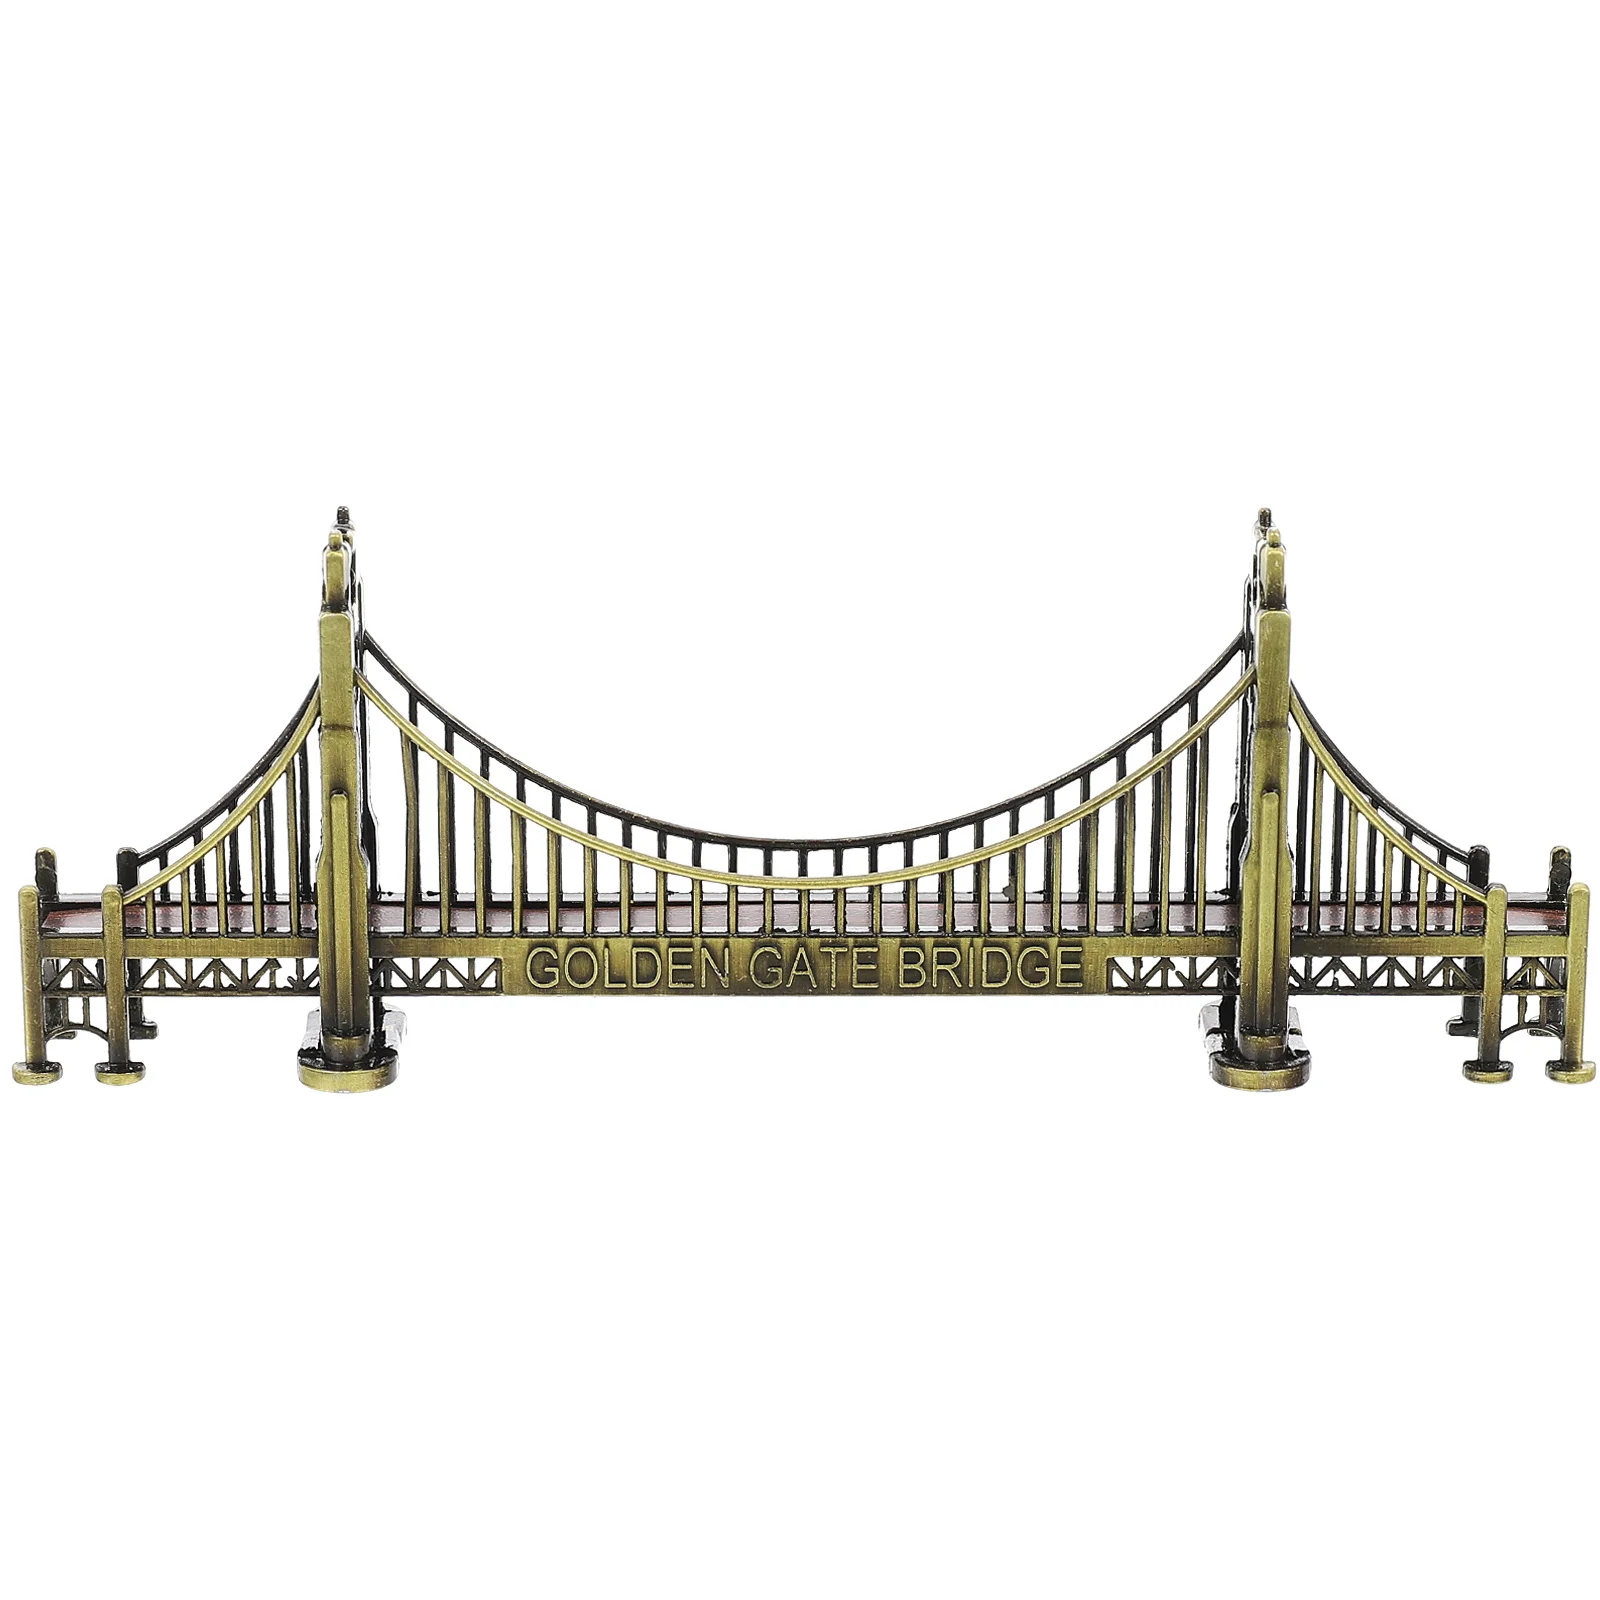 puente golden maqueta – puente golden gate maqueta con envío gratis en AliExpress version